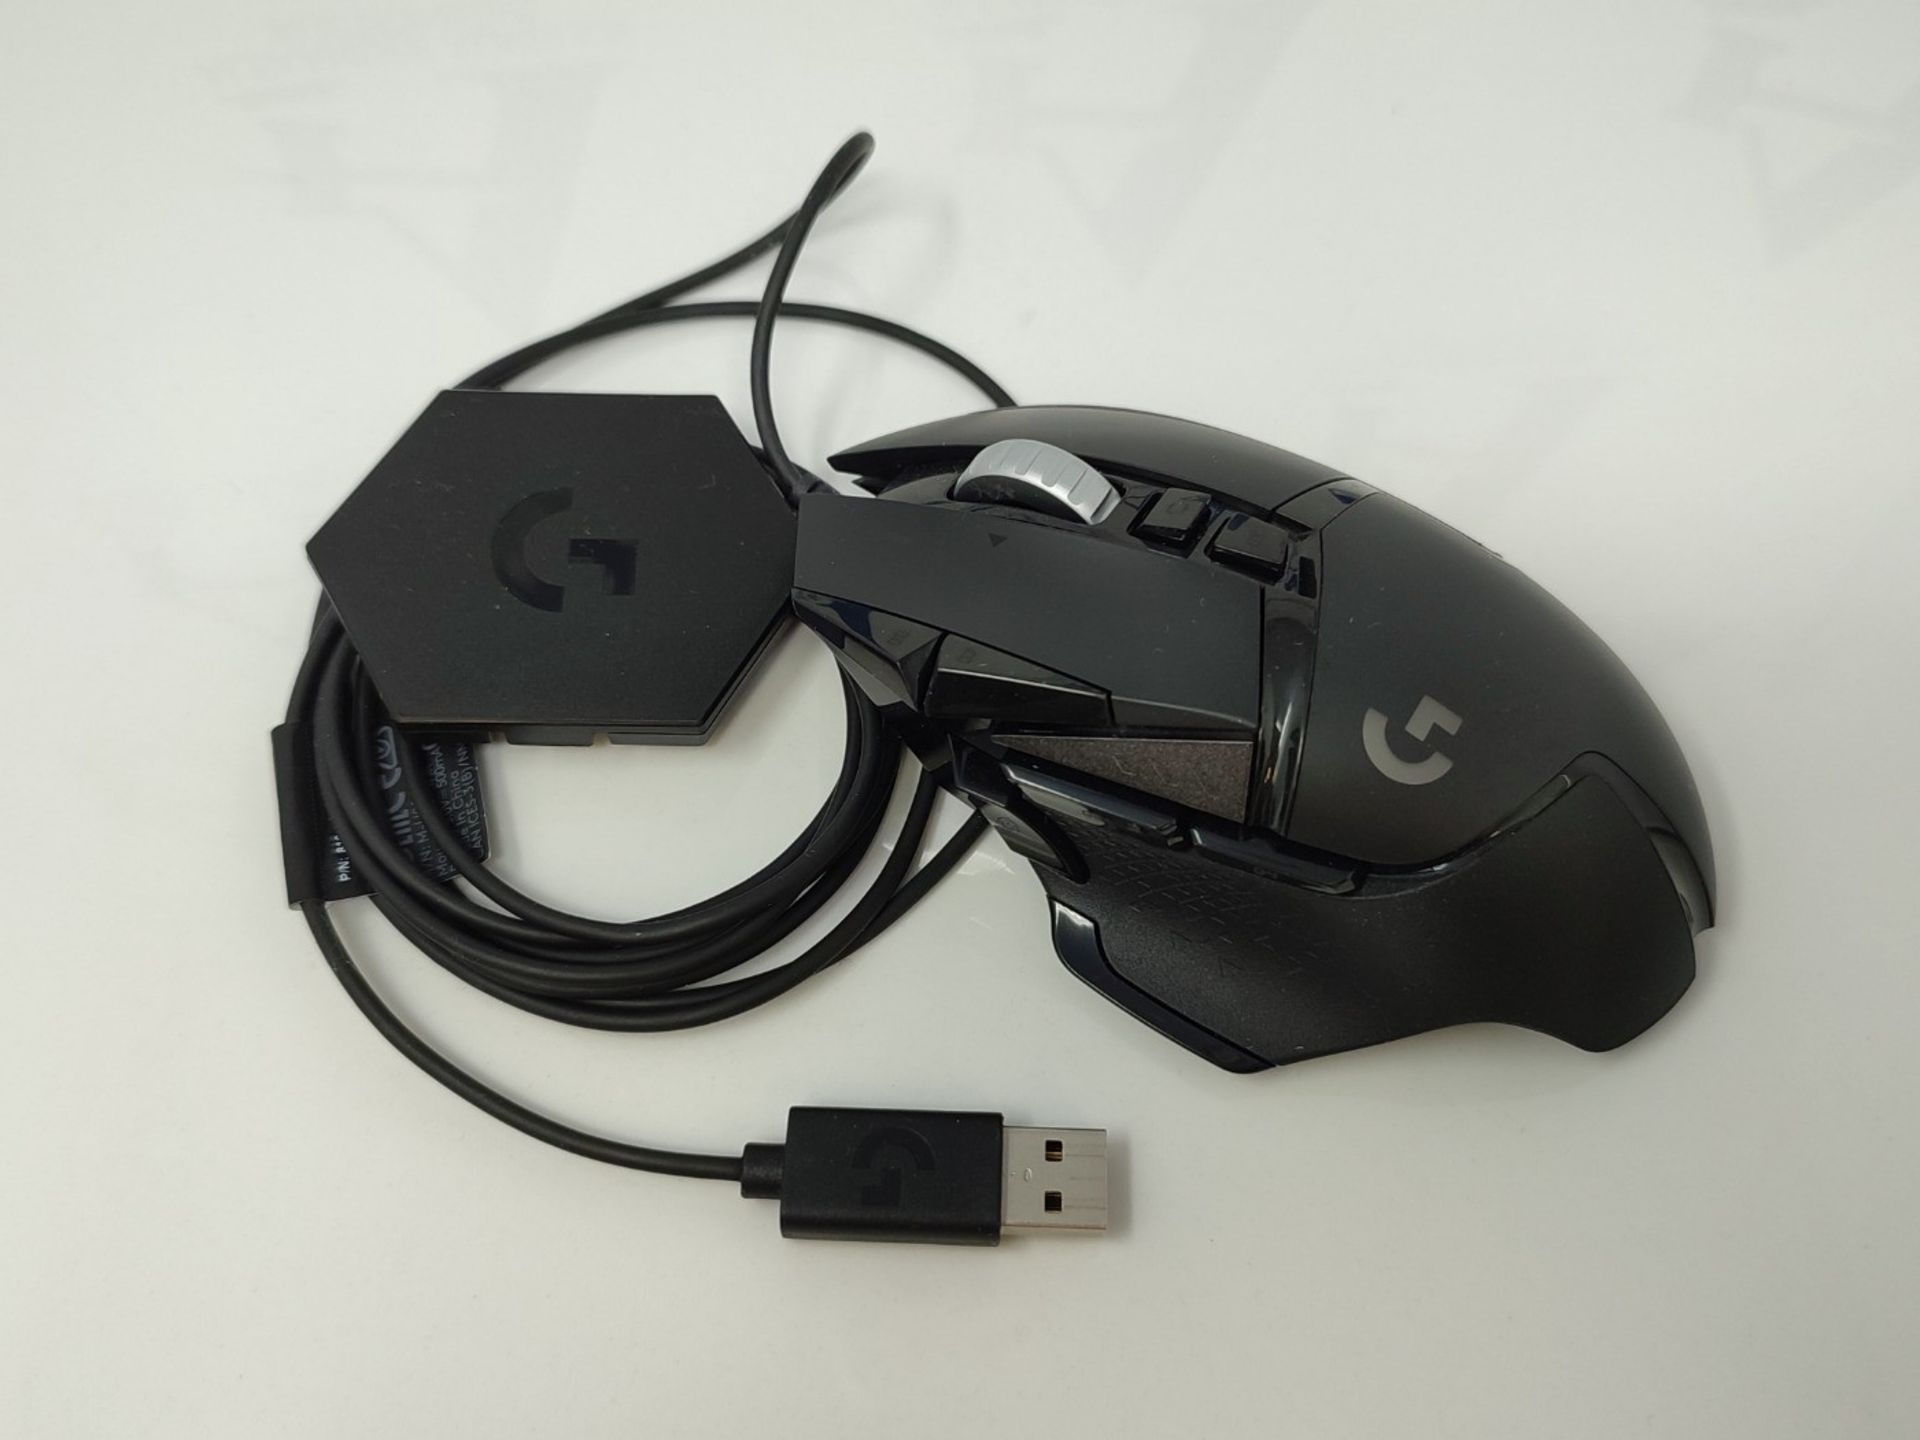 Logitech G502 HERO High-Performance Gaming Mouse with HERO 25K DPI optical sensor, RGB - Image 3 of 3